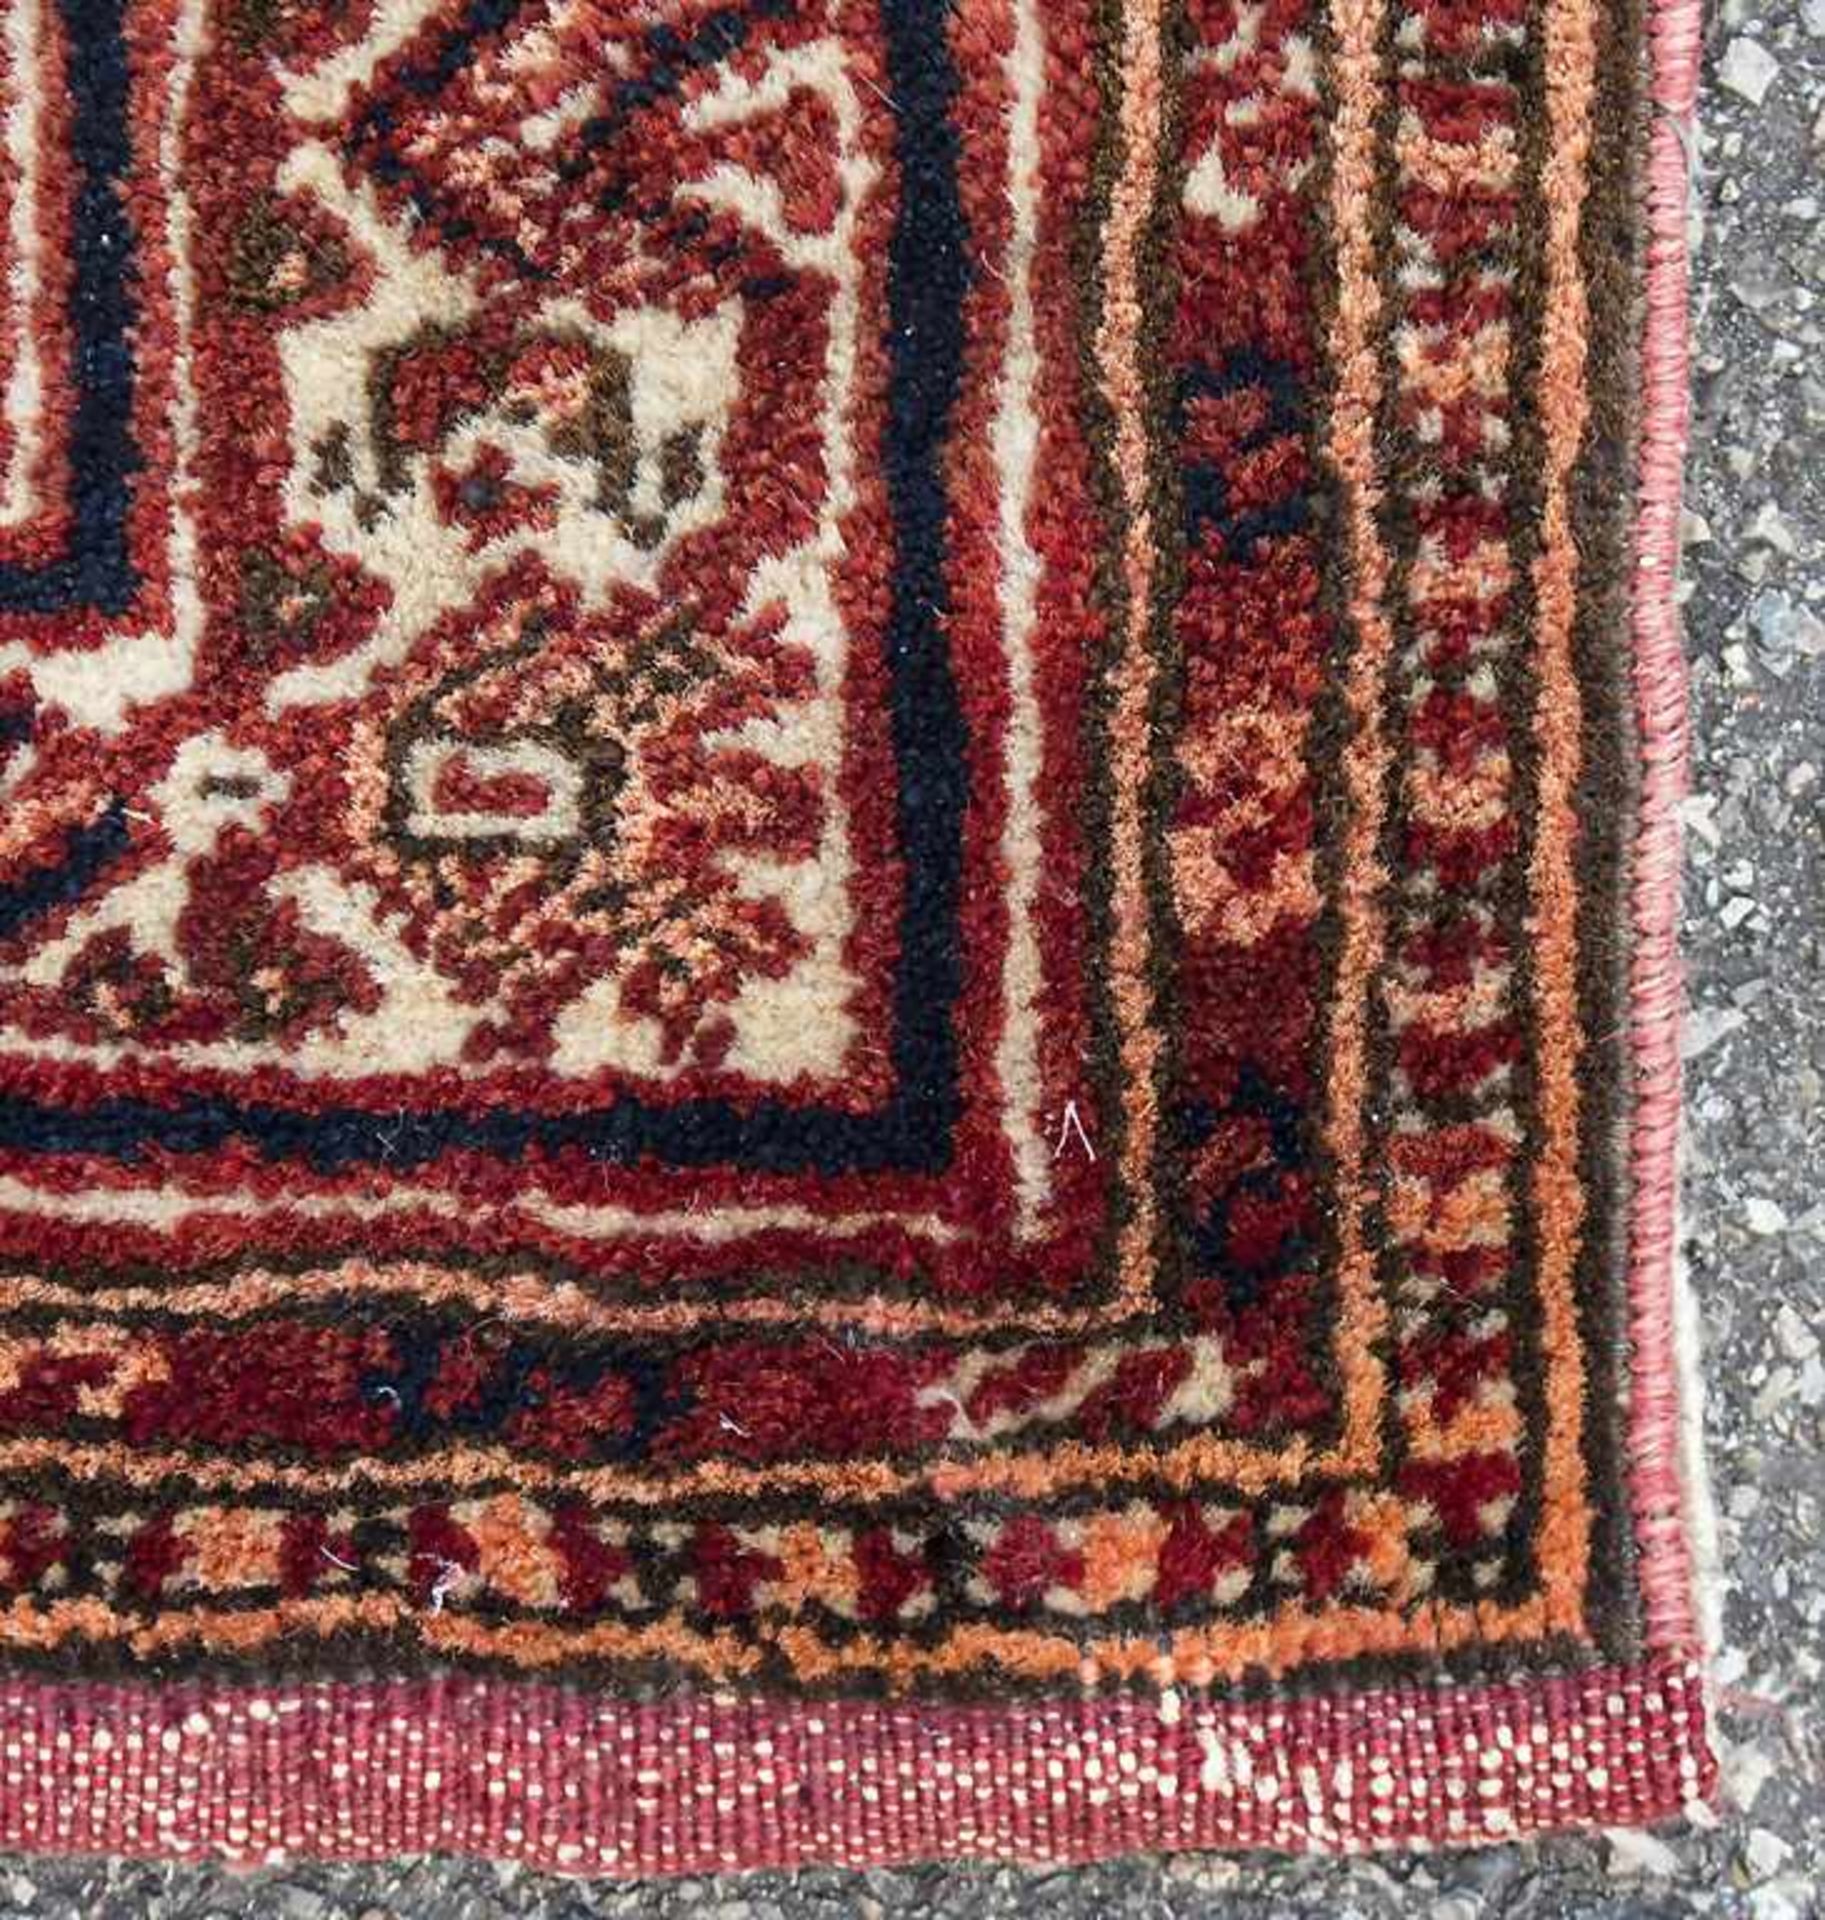 Orientteppich, Zelttasche / An oriental carpet, tentbag - Bild 2 aus 4